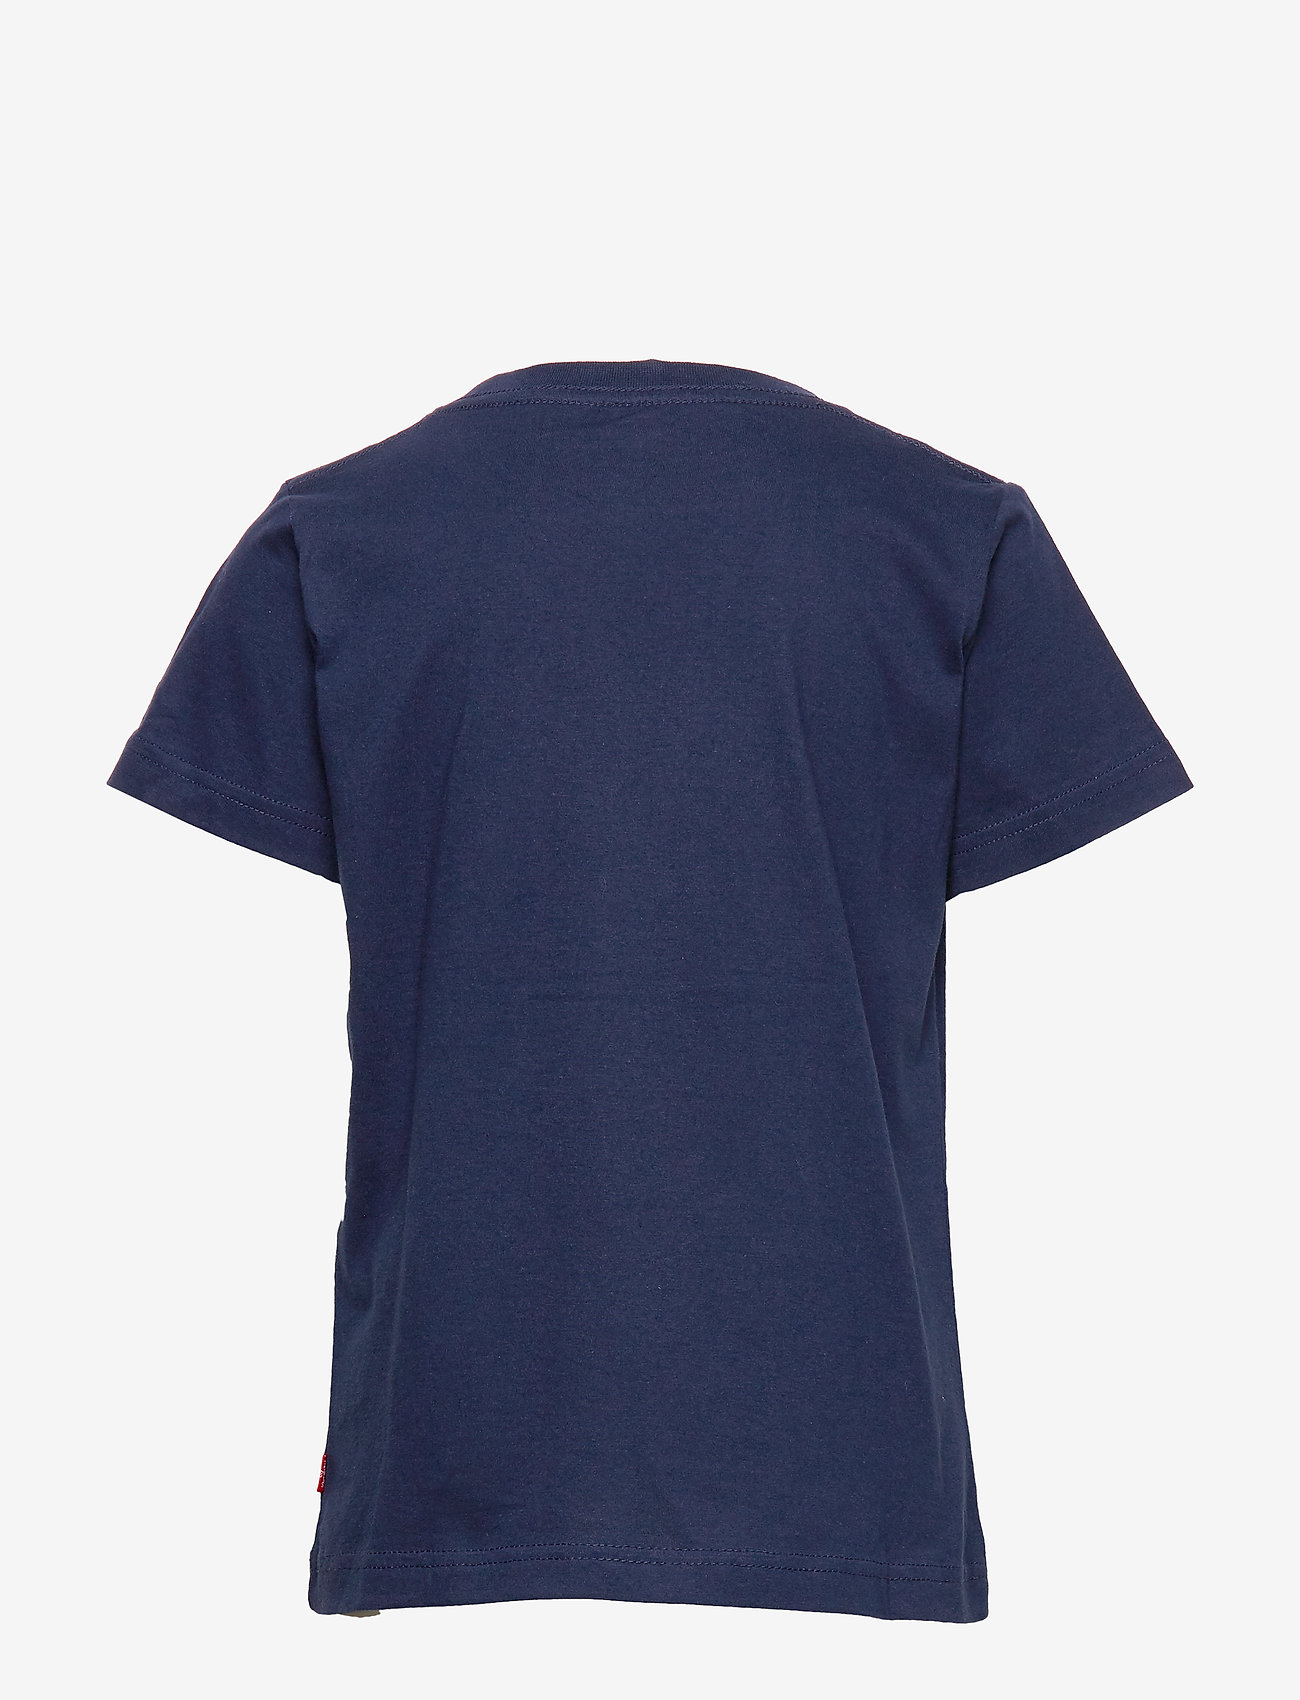 Levi's - Levi's® Graphic Batwing Tee - marškinėliai trumpomis rankovėmis - dress blues - 1